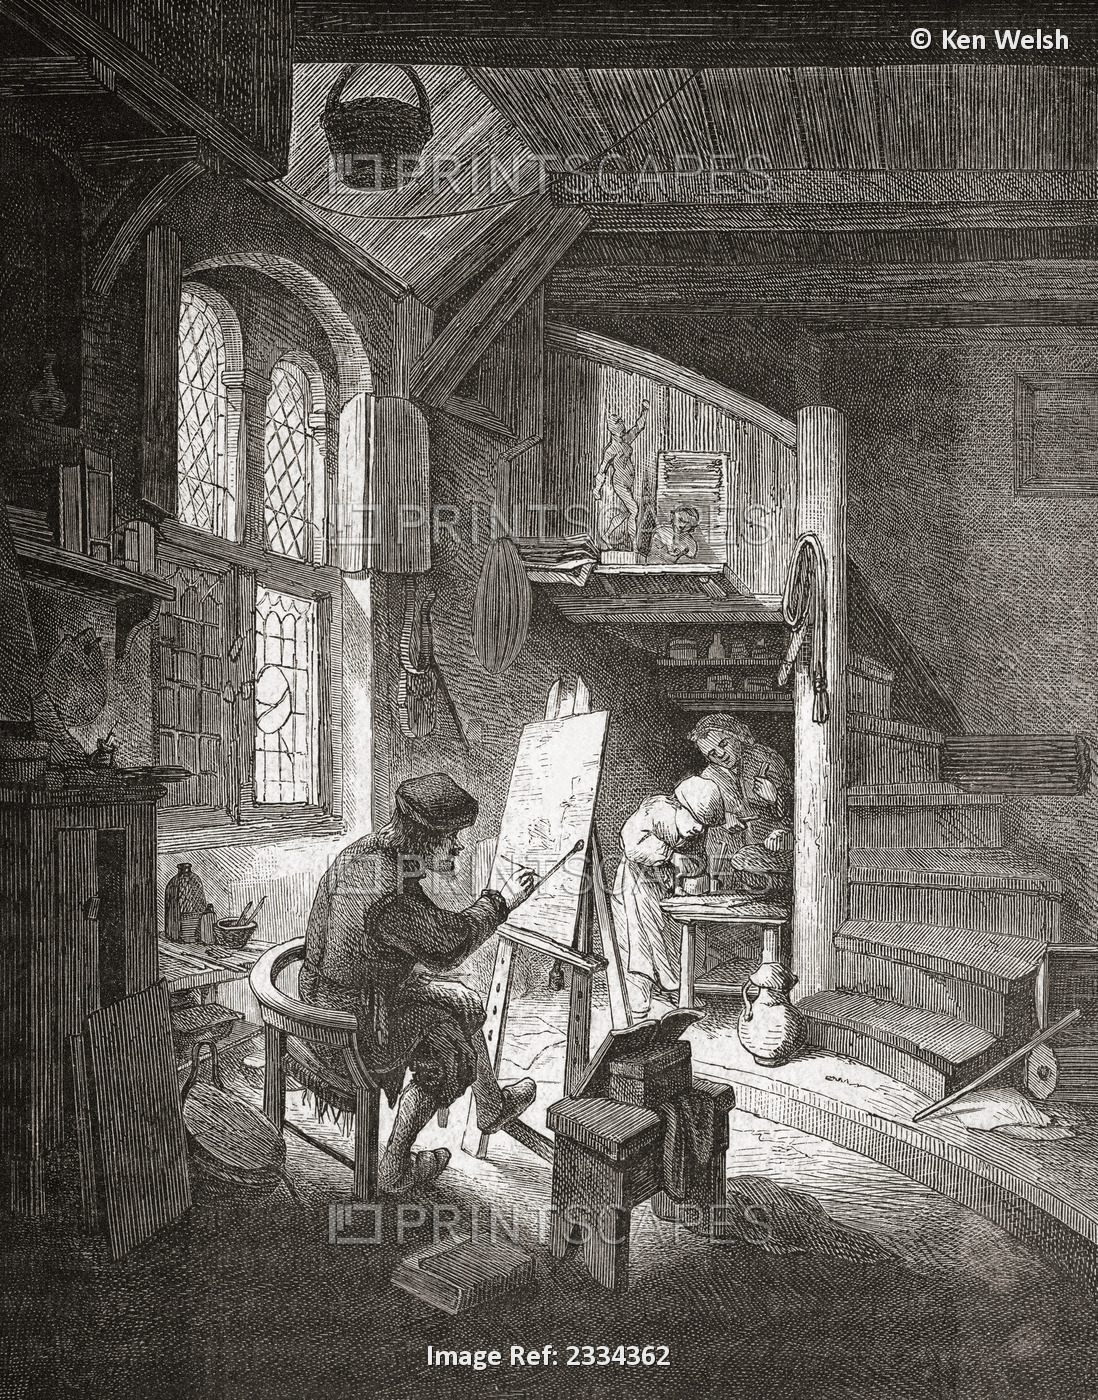 The Painter In His Workshop. Selfportrait Of Adriaen Van Ostade, 1610 Â€